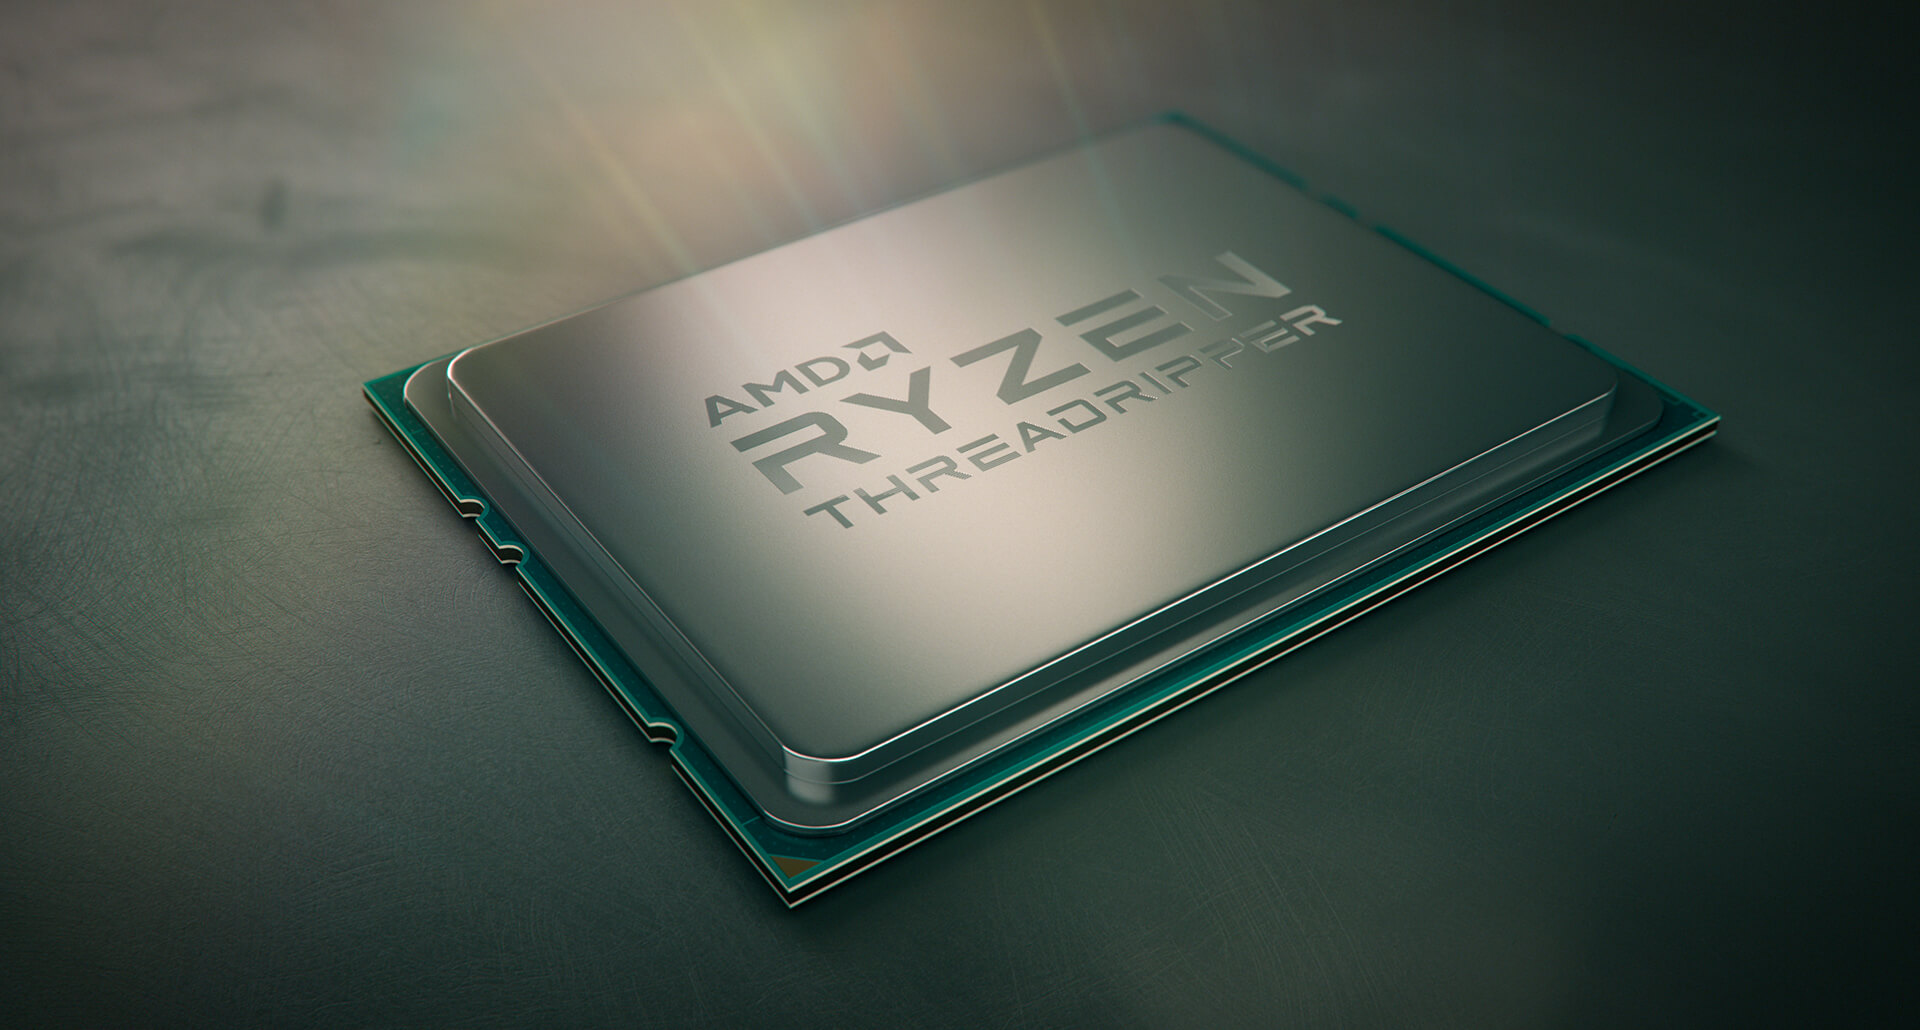 AMD-Ryzen-Threadripper